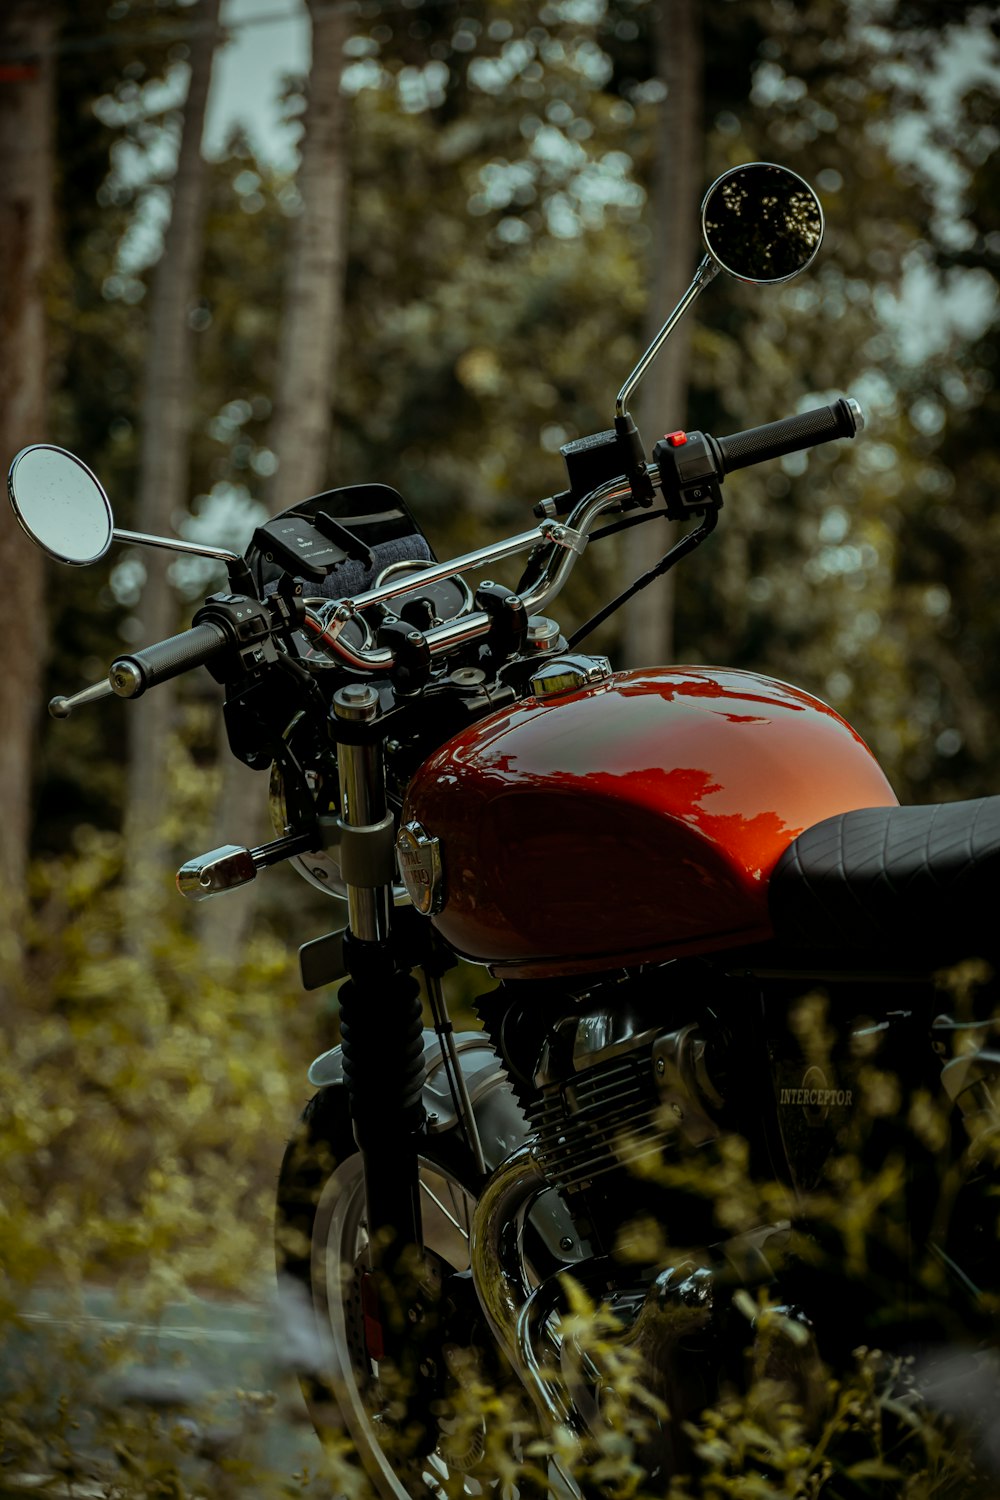 red and black motorcycle in tilt shift lens